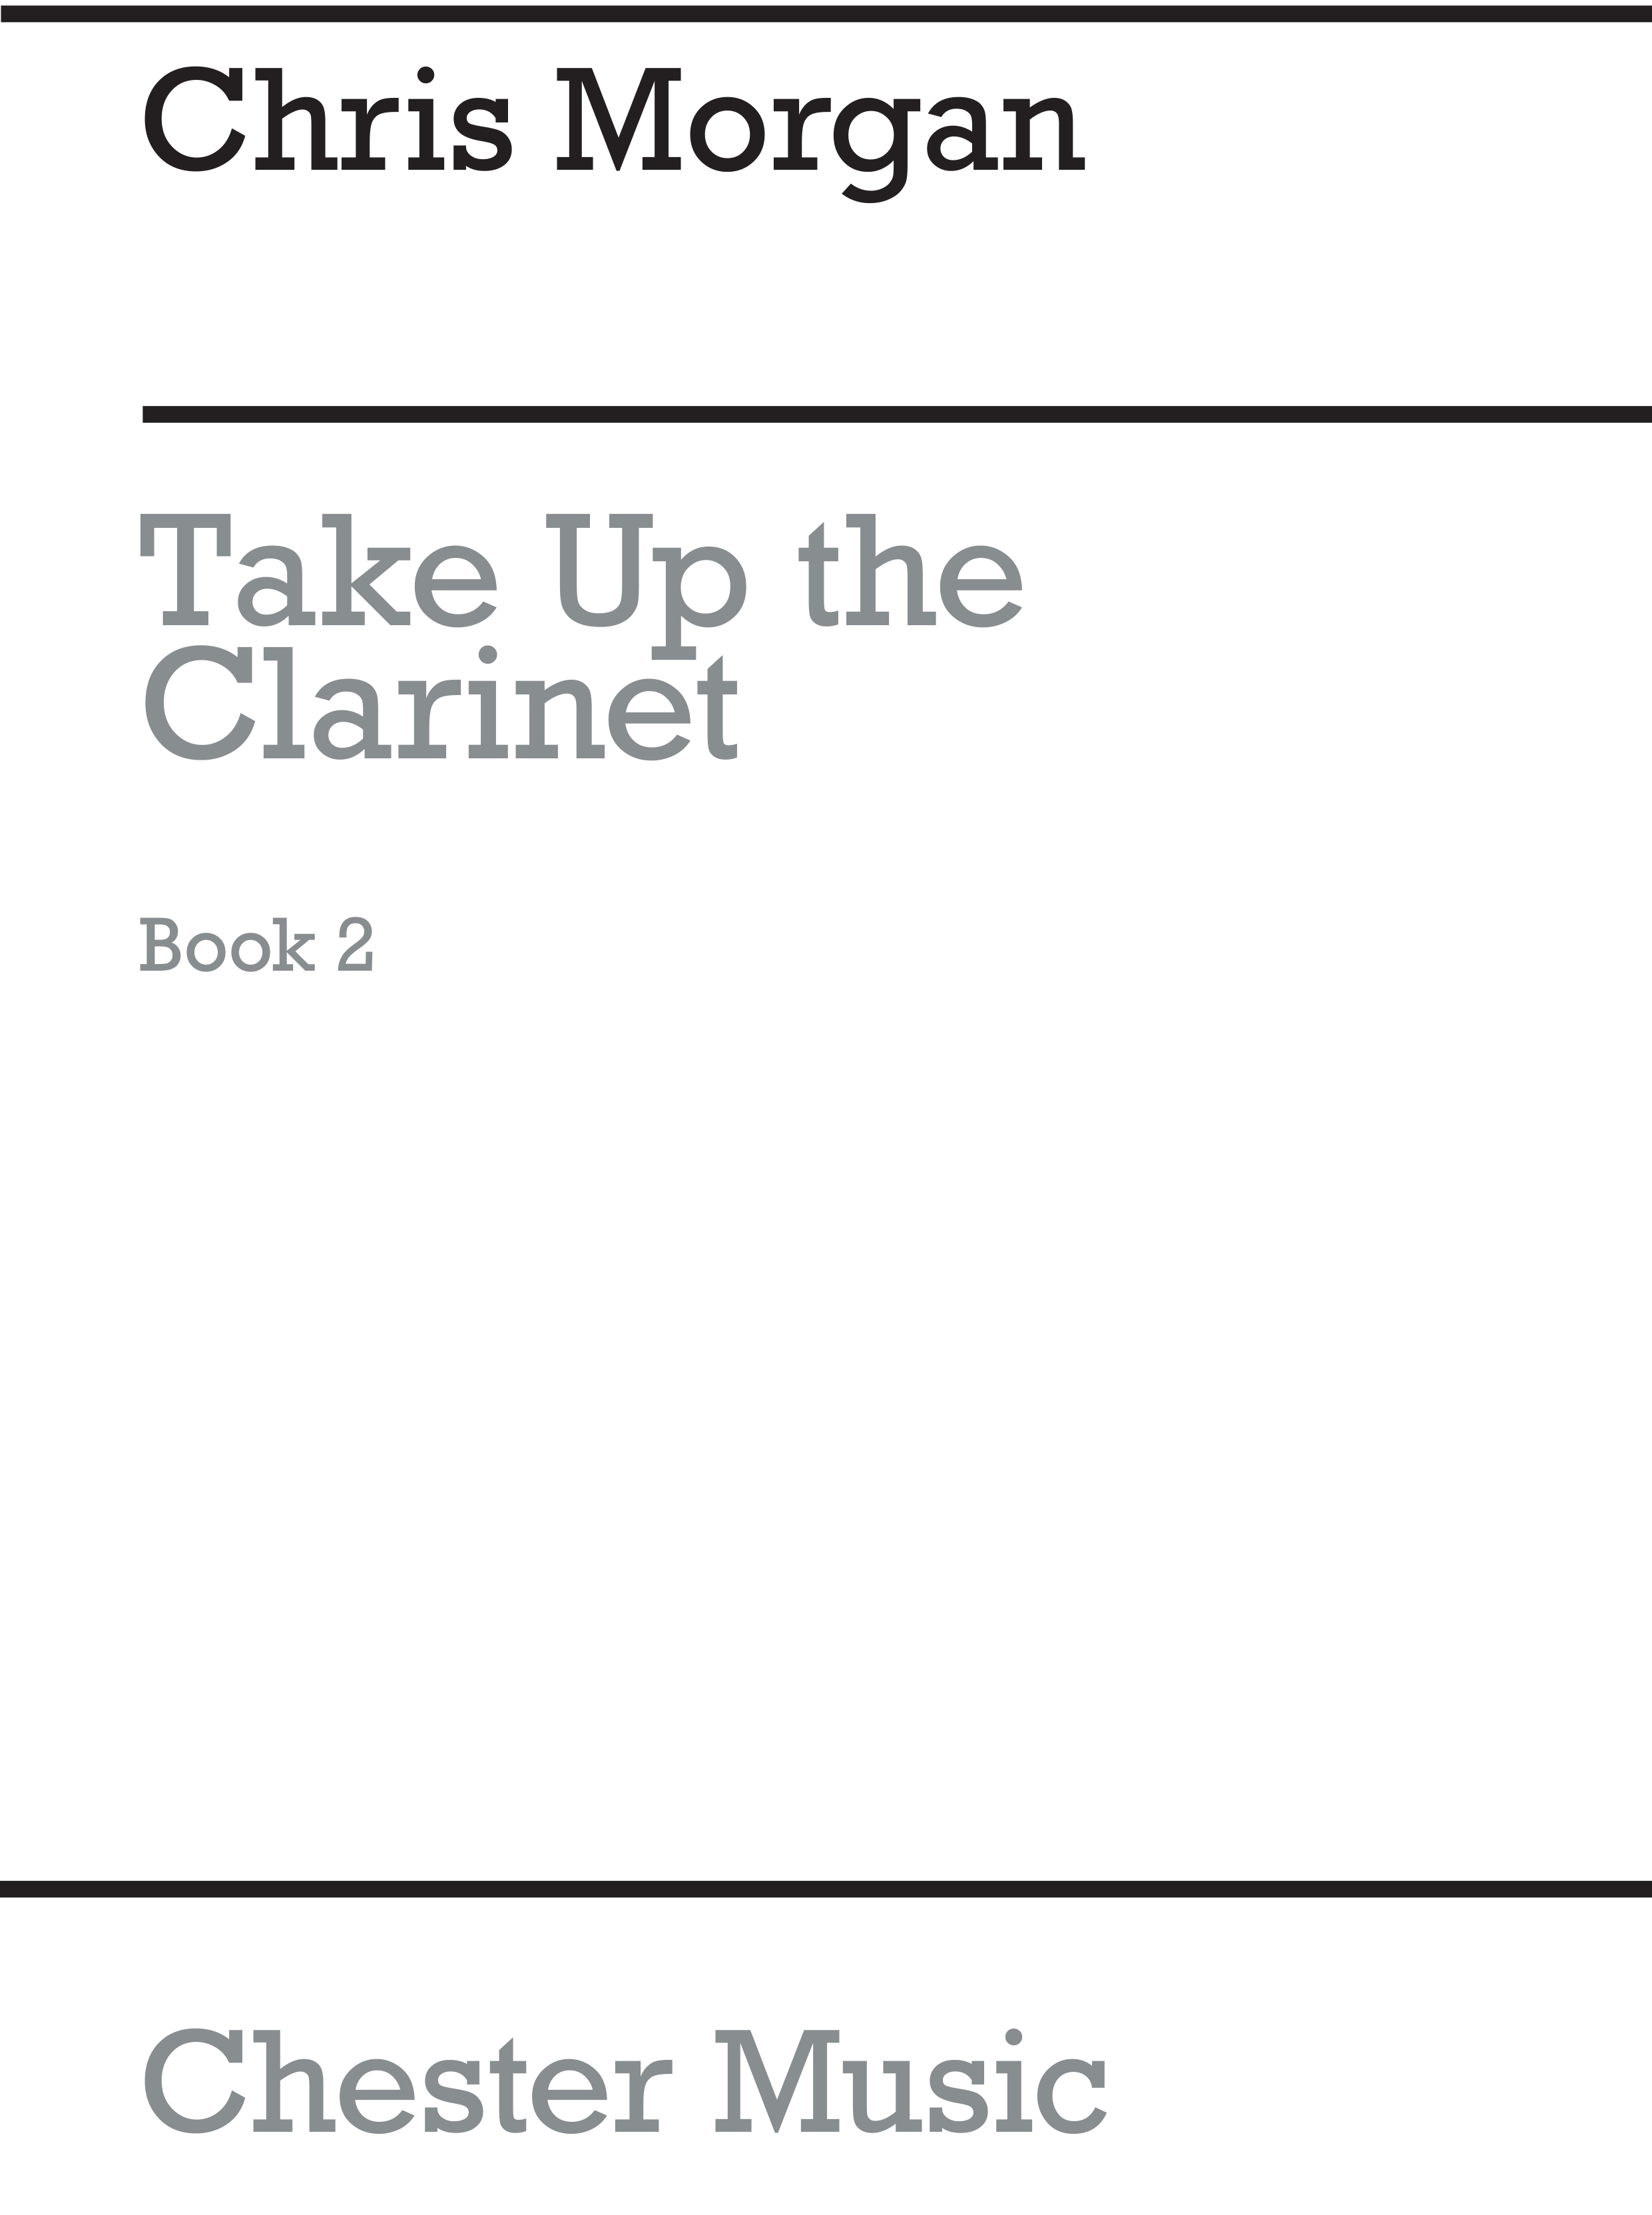 Chris Morgan: Take Up The Clarinet Repertoire Book 2: Clarinet: Instrumental